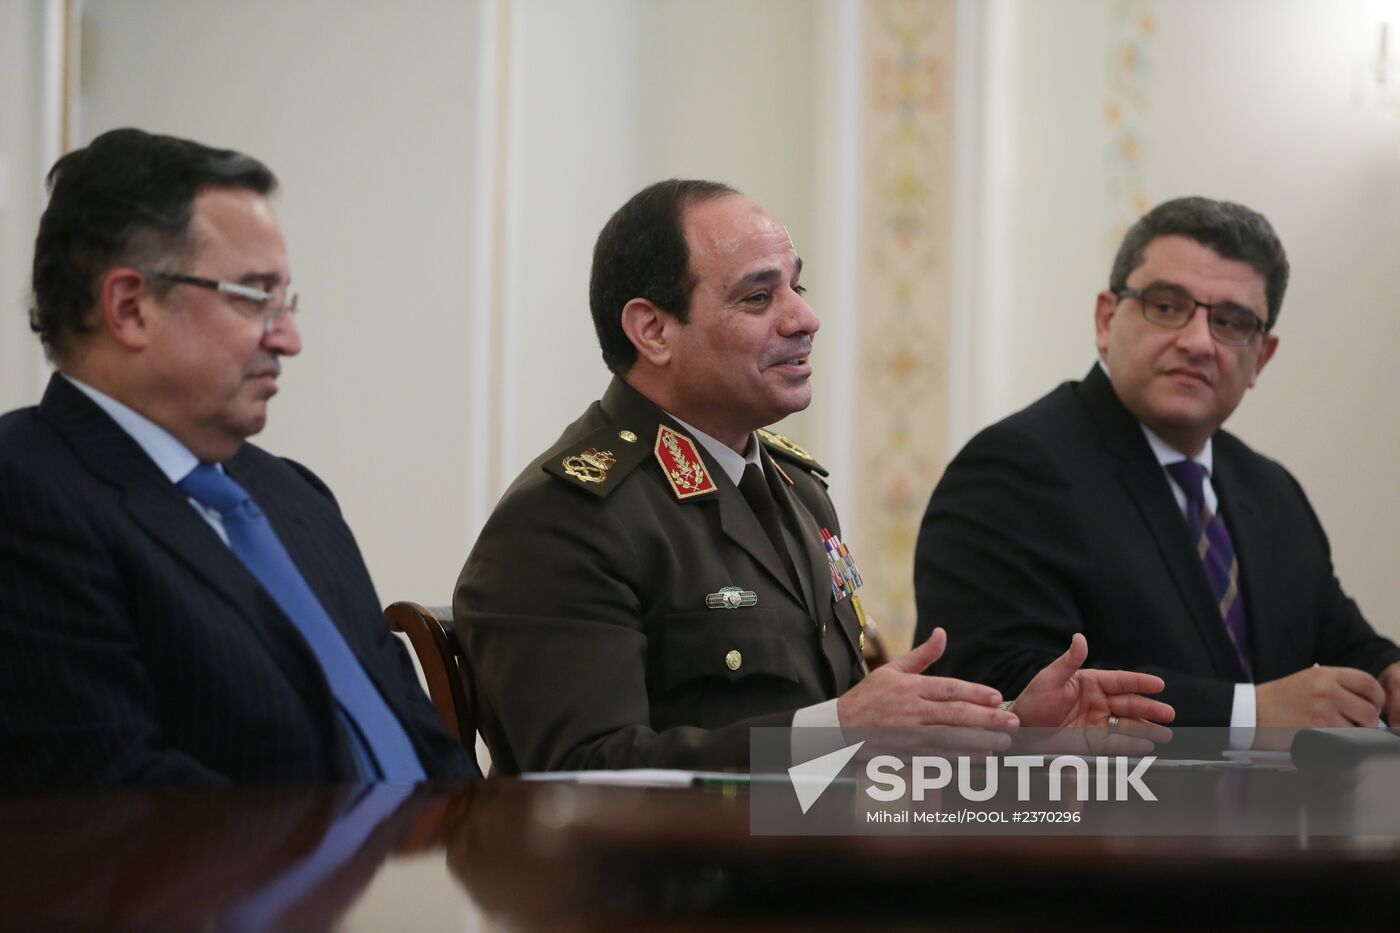 Vladimir Putin meets with Nabil Fahmy and Abdul Fattah al-Sisi